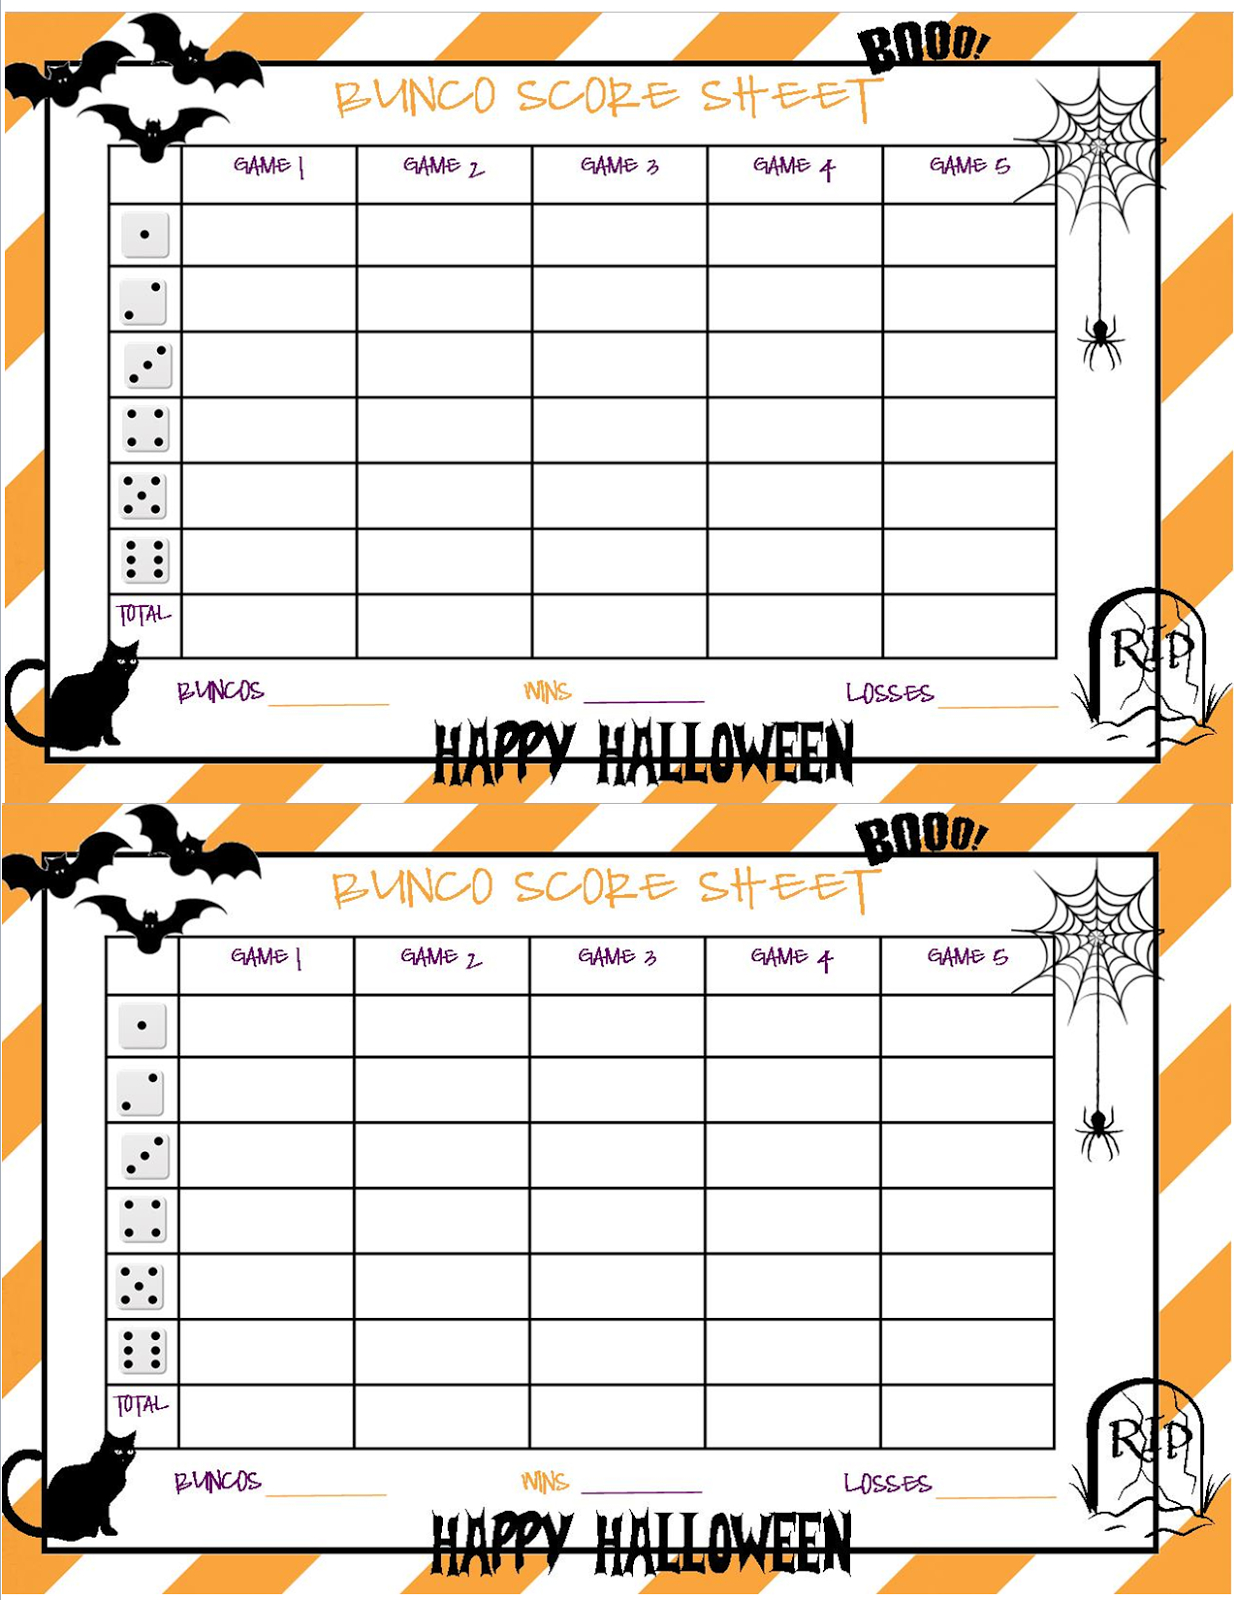 Recipes From Stephanie: Halloween Bunco Sheet - Free Printable Halloween Bunco Score Sheets